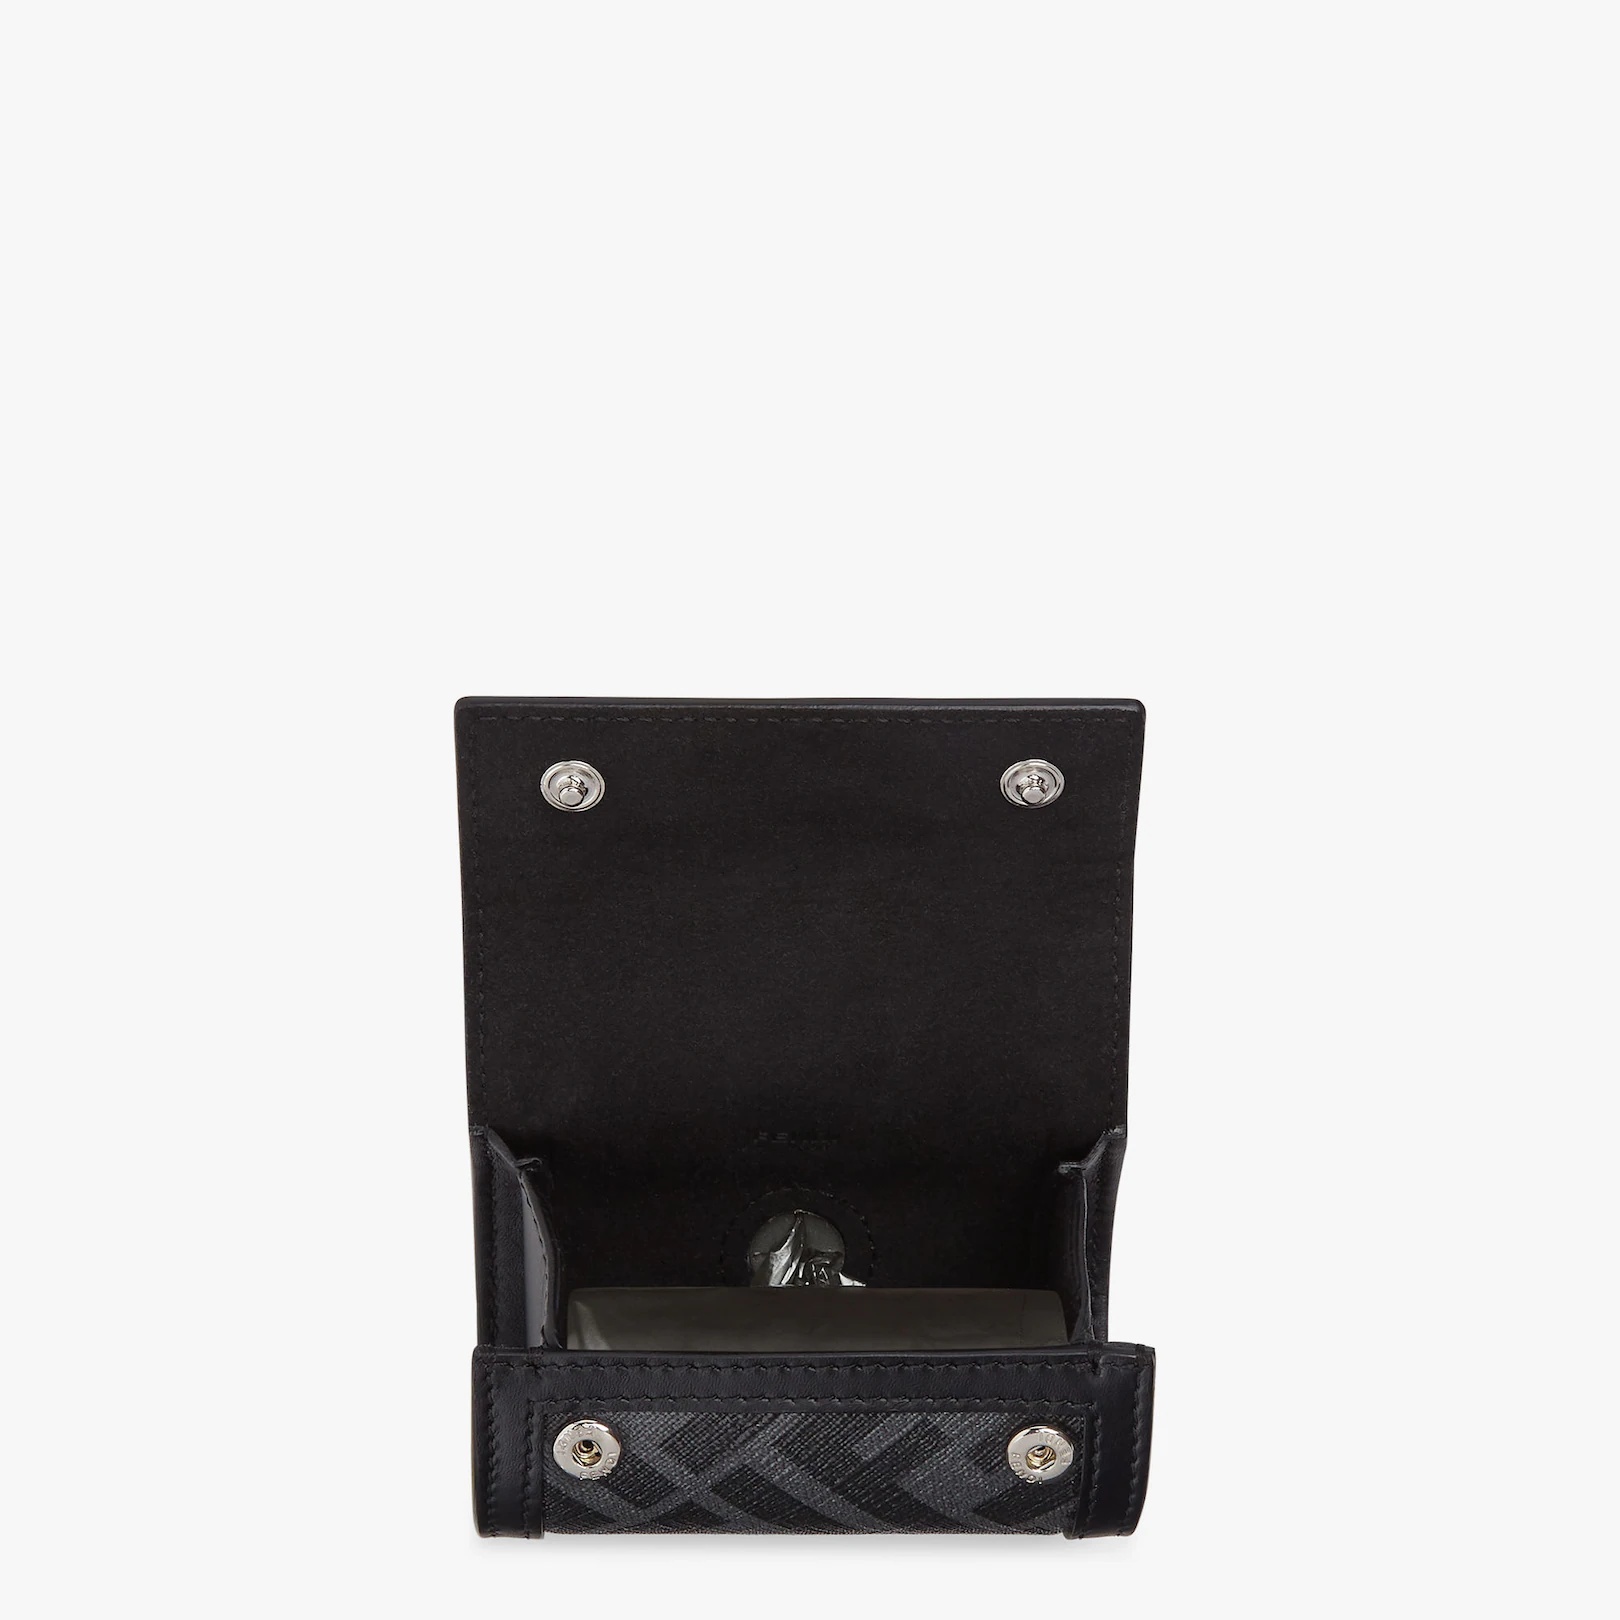 Black fabric bag holder - 3